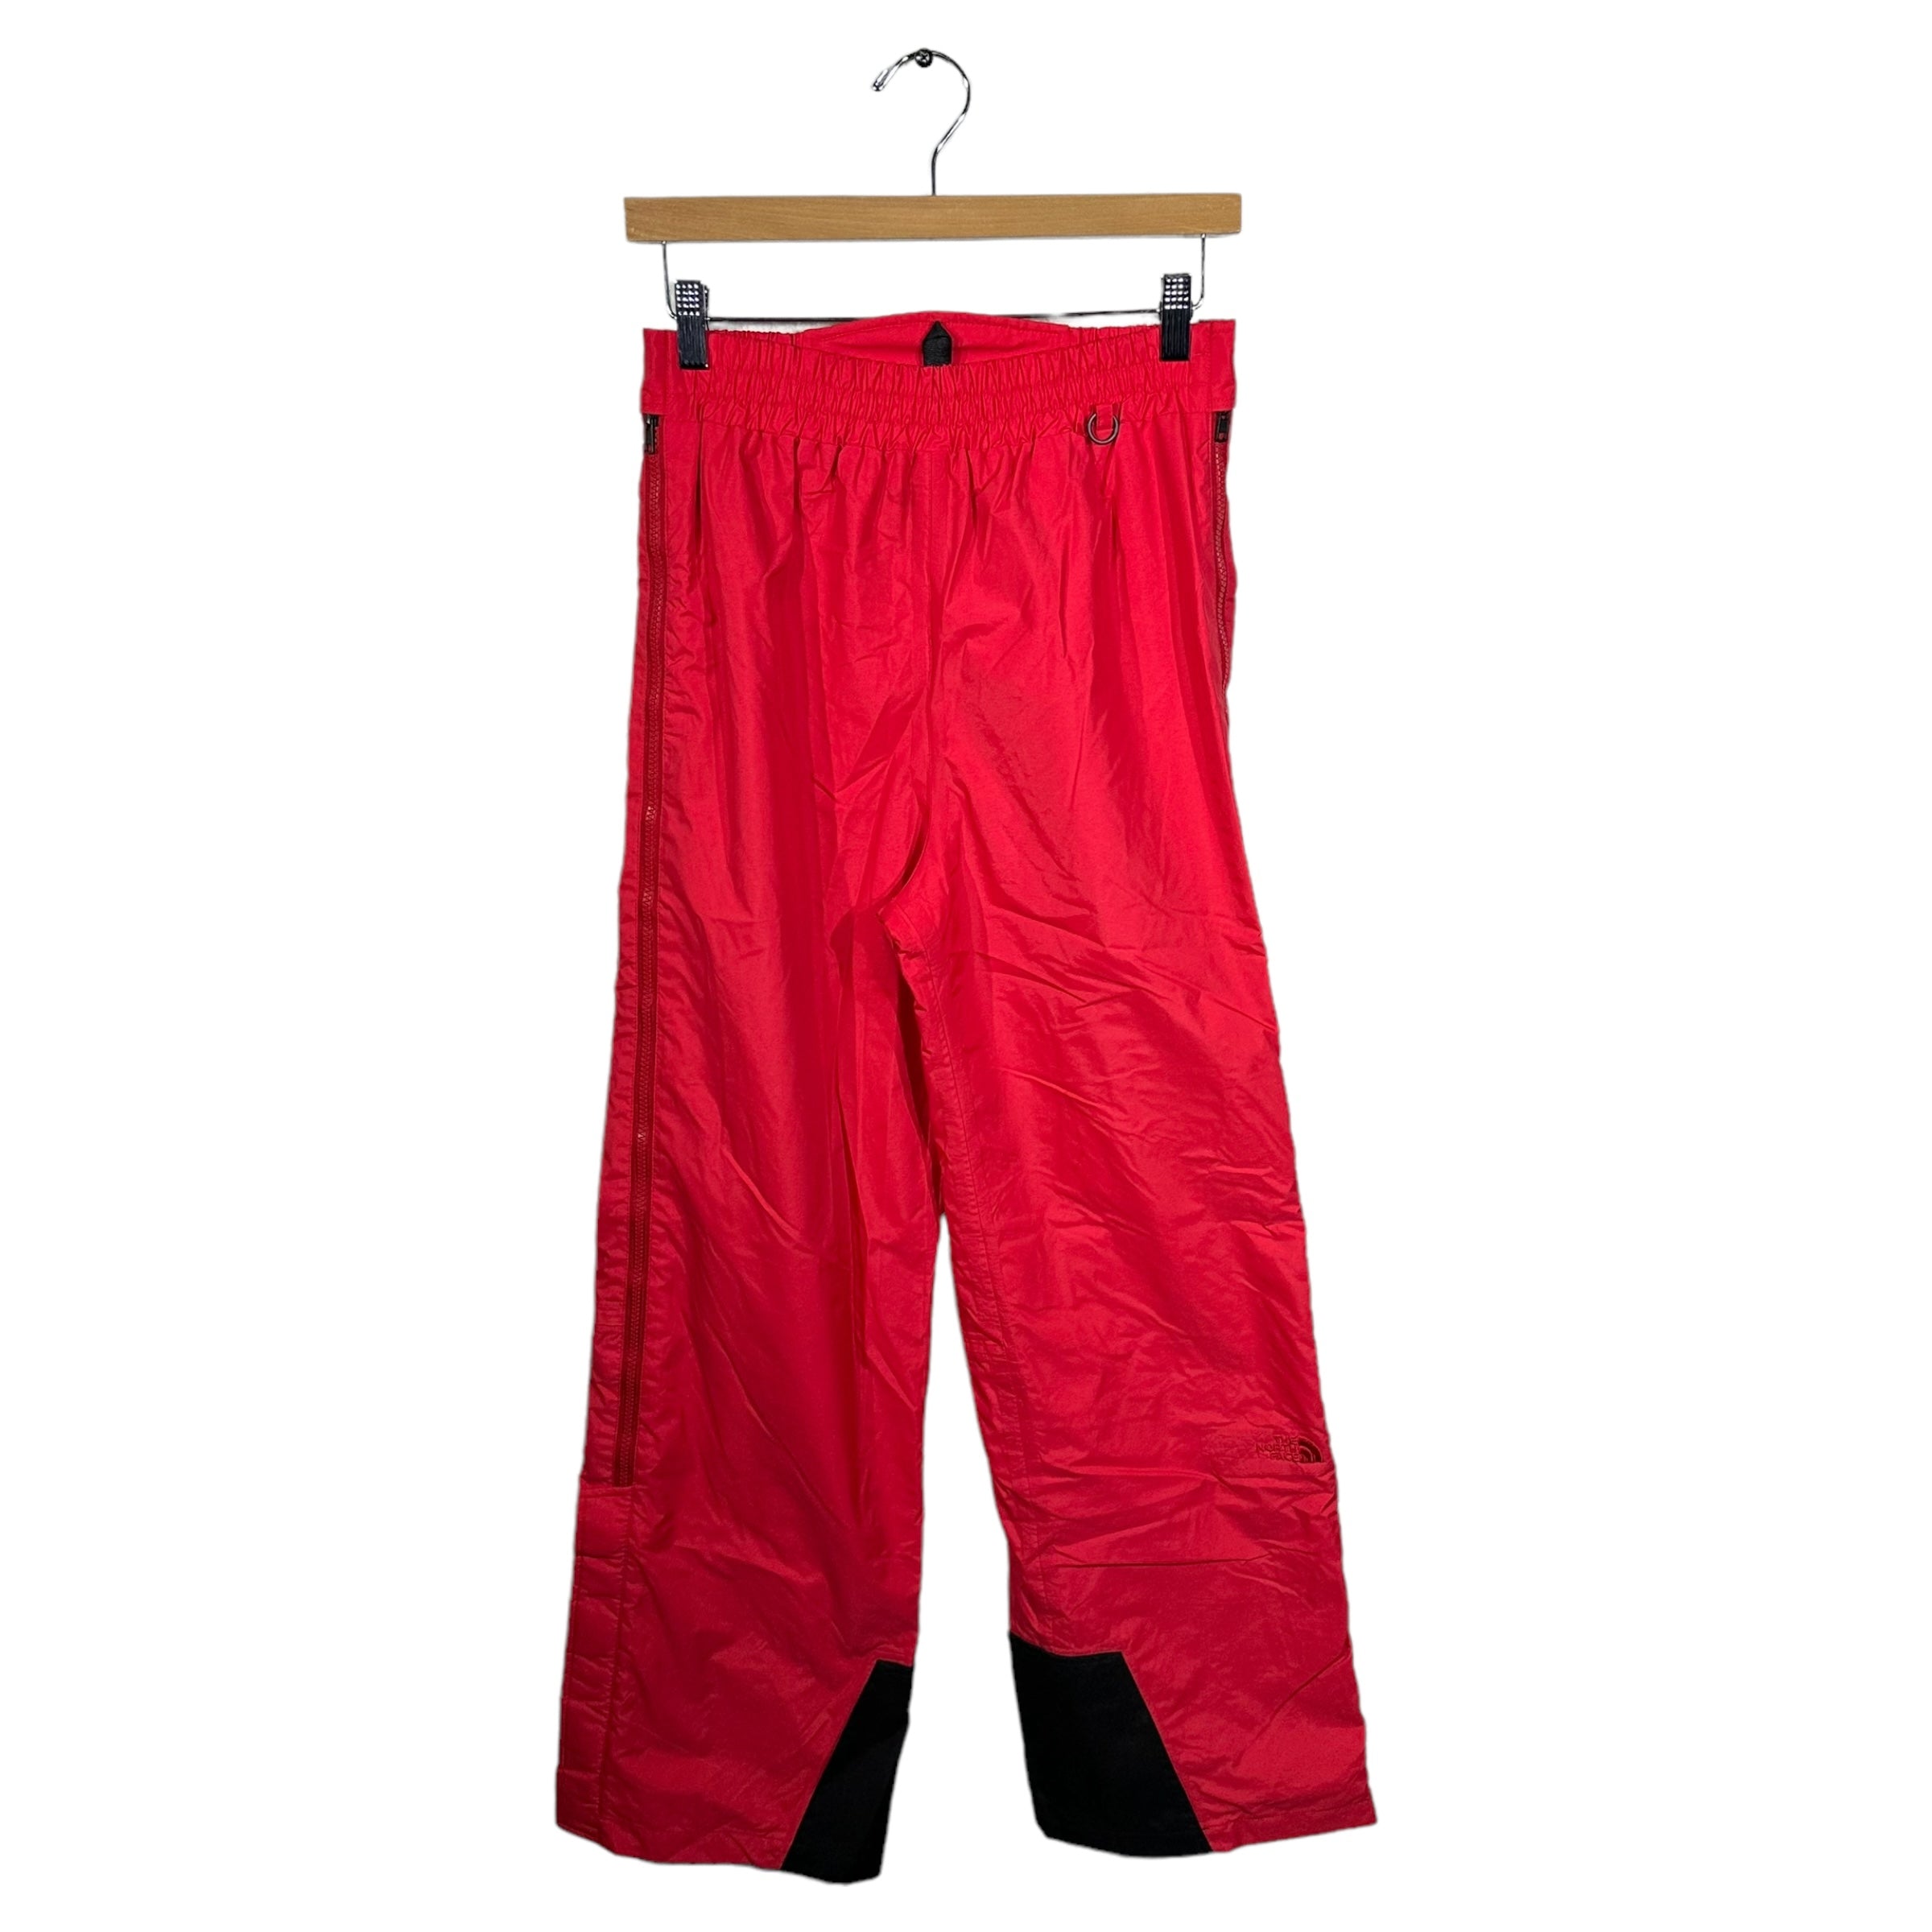 Vintage The North Face Ski Sweatpants